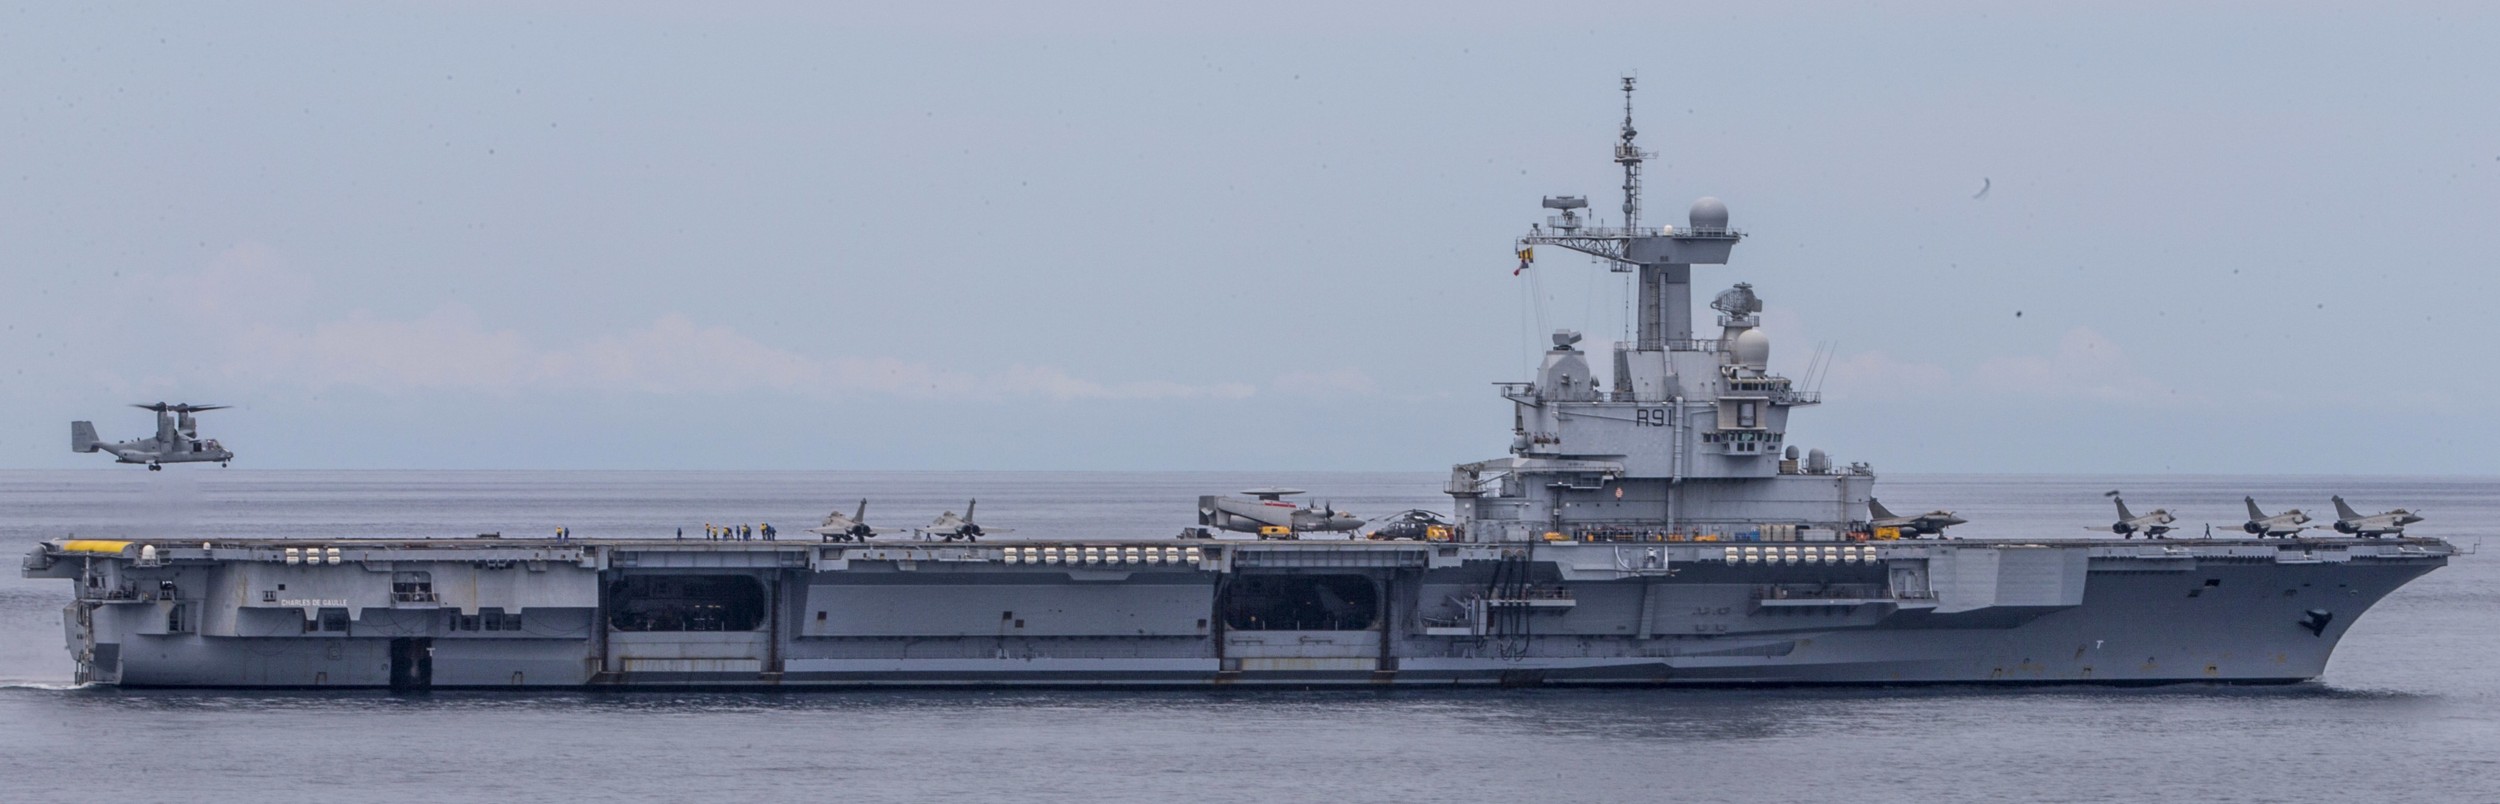 r-91 fs charles de gaulle aircraft carrier french navy marine nationale 62 mv-22 osprey usmc